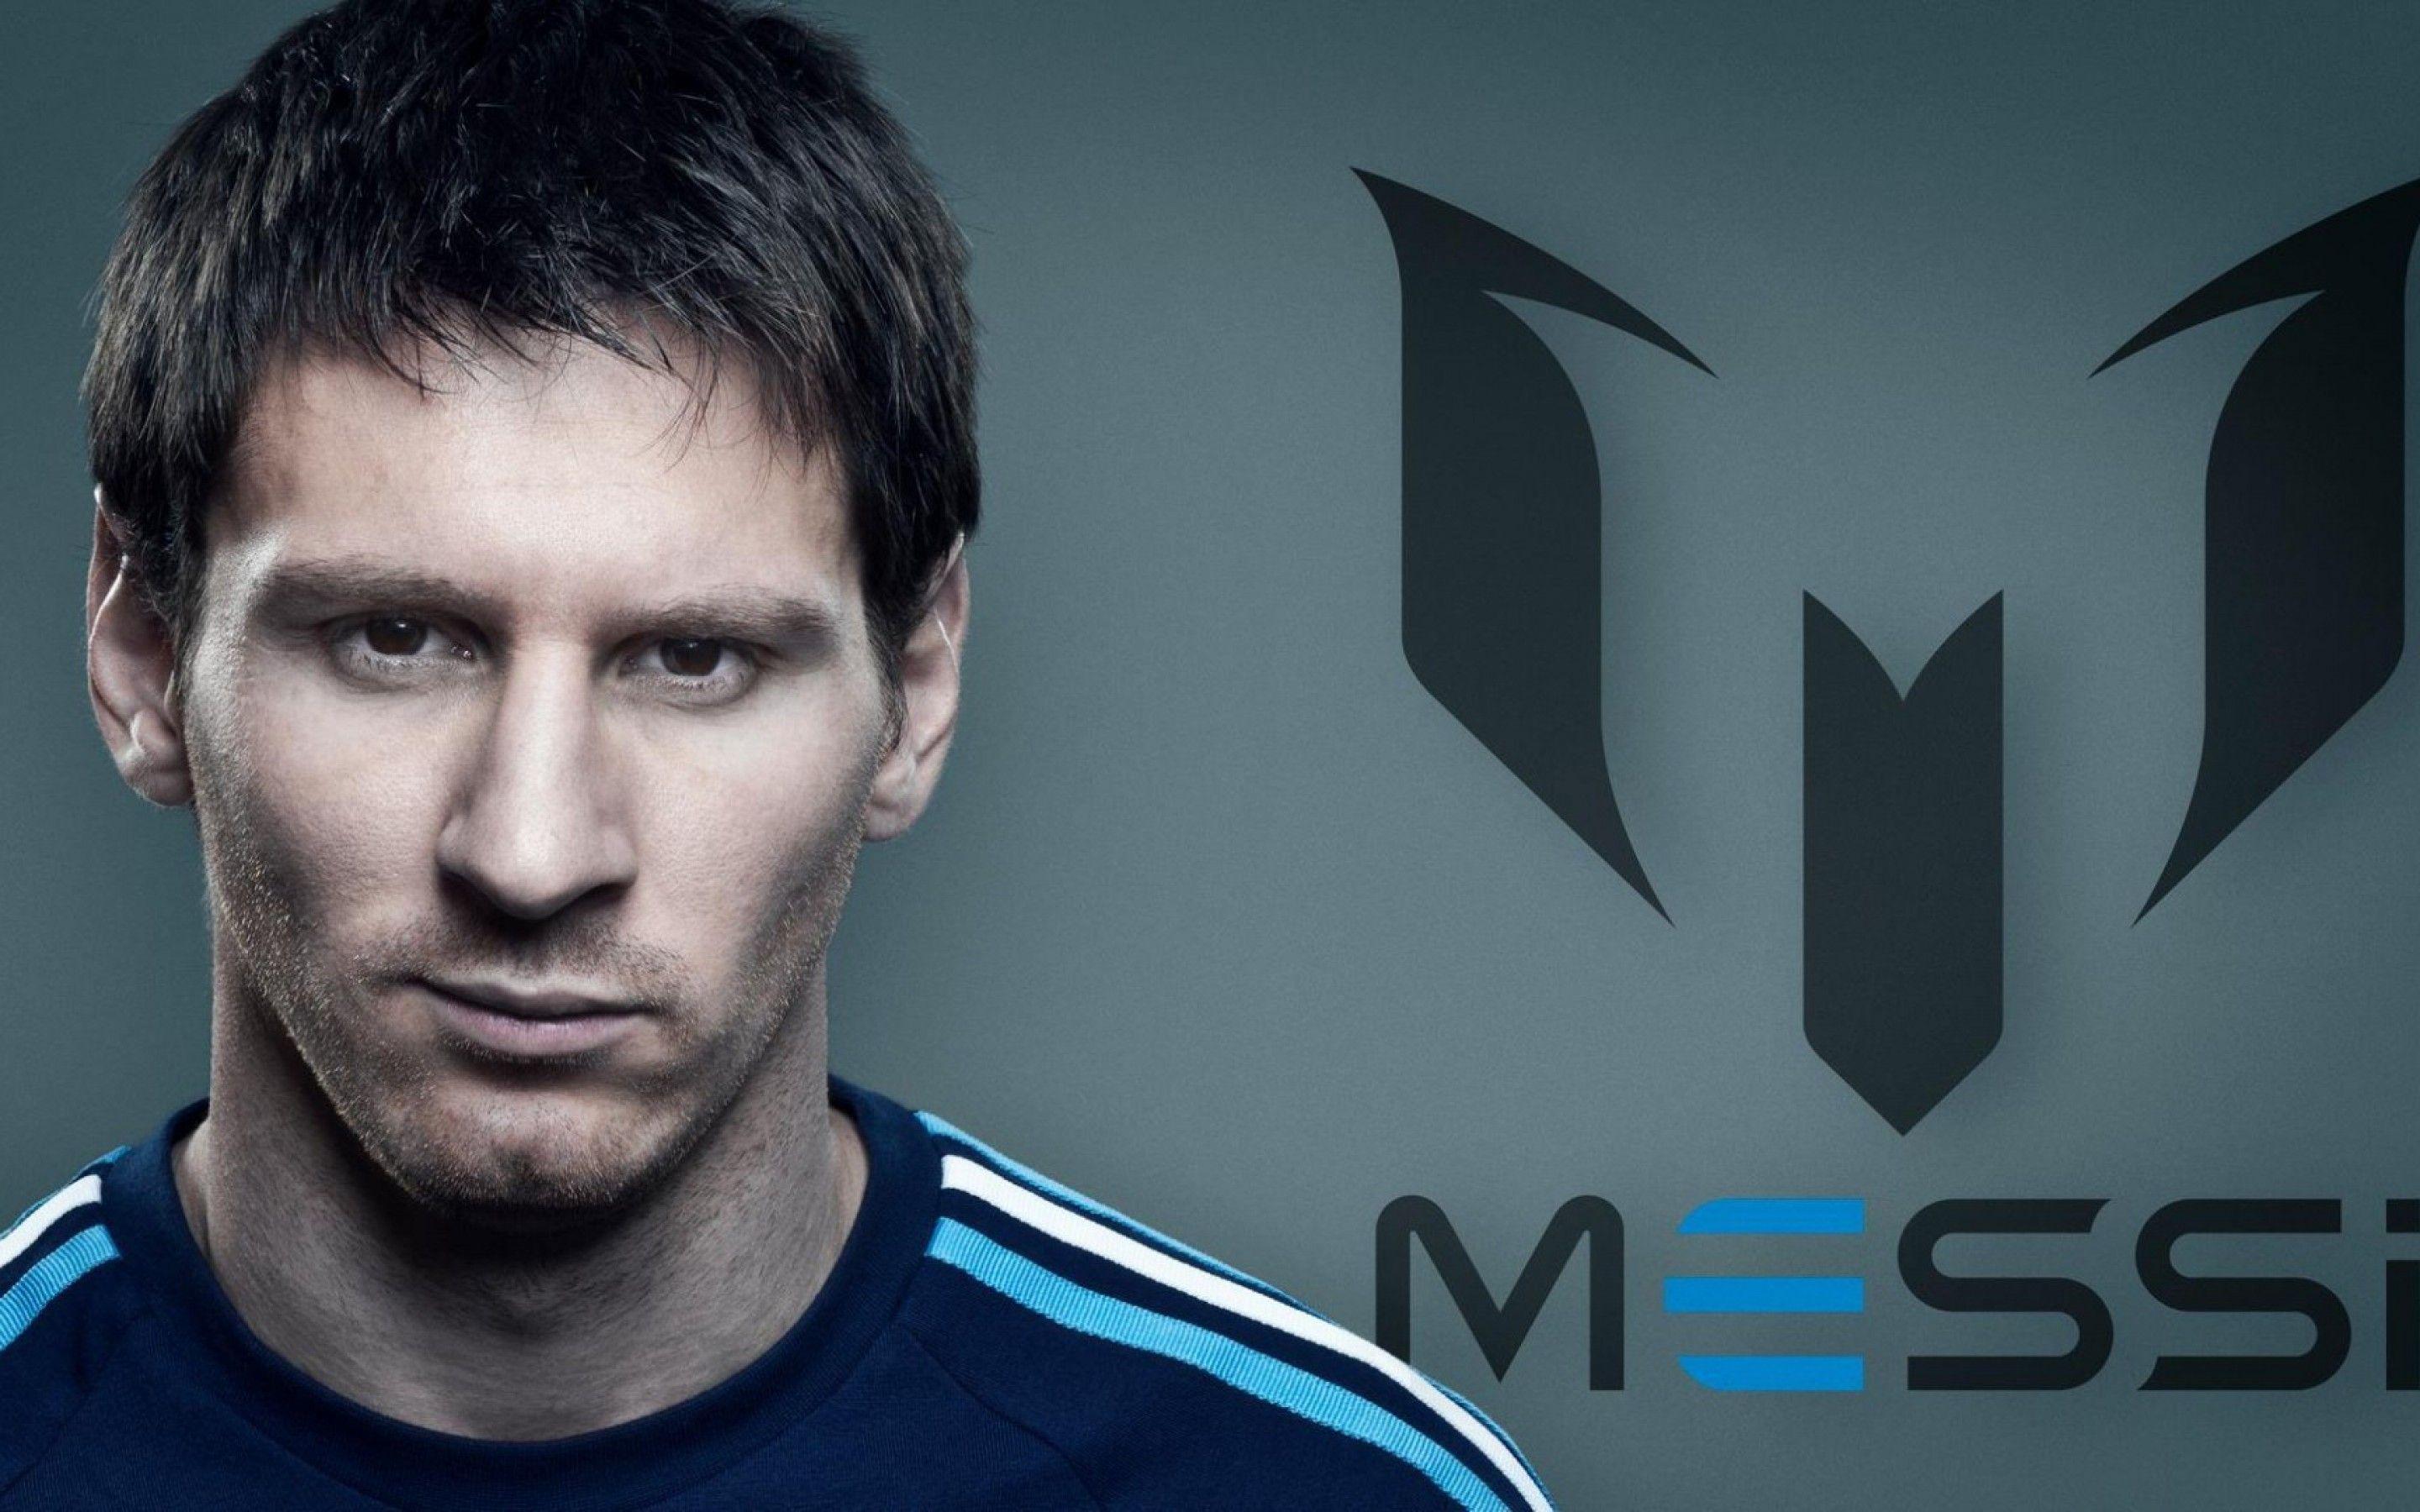 Lionel Messi Argentina Wallpaper. TanukinoSippo